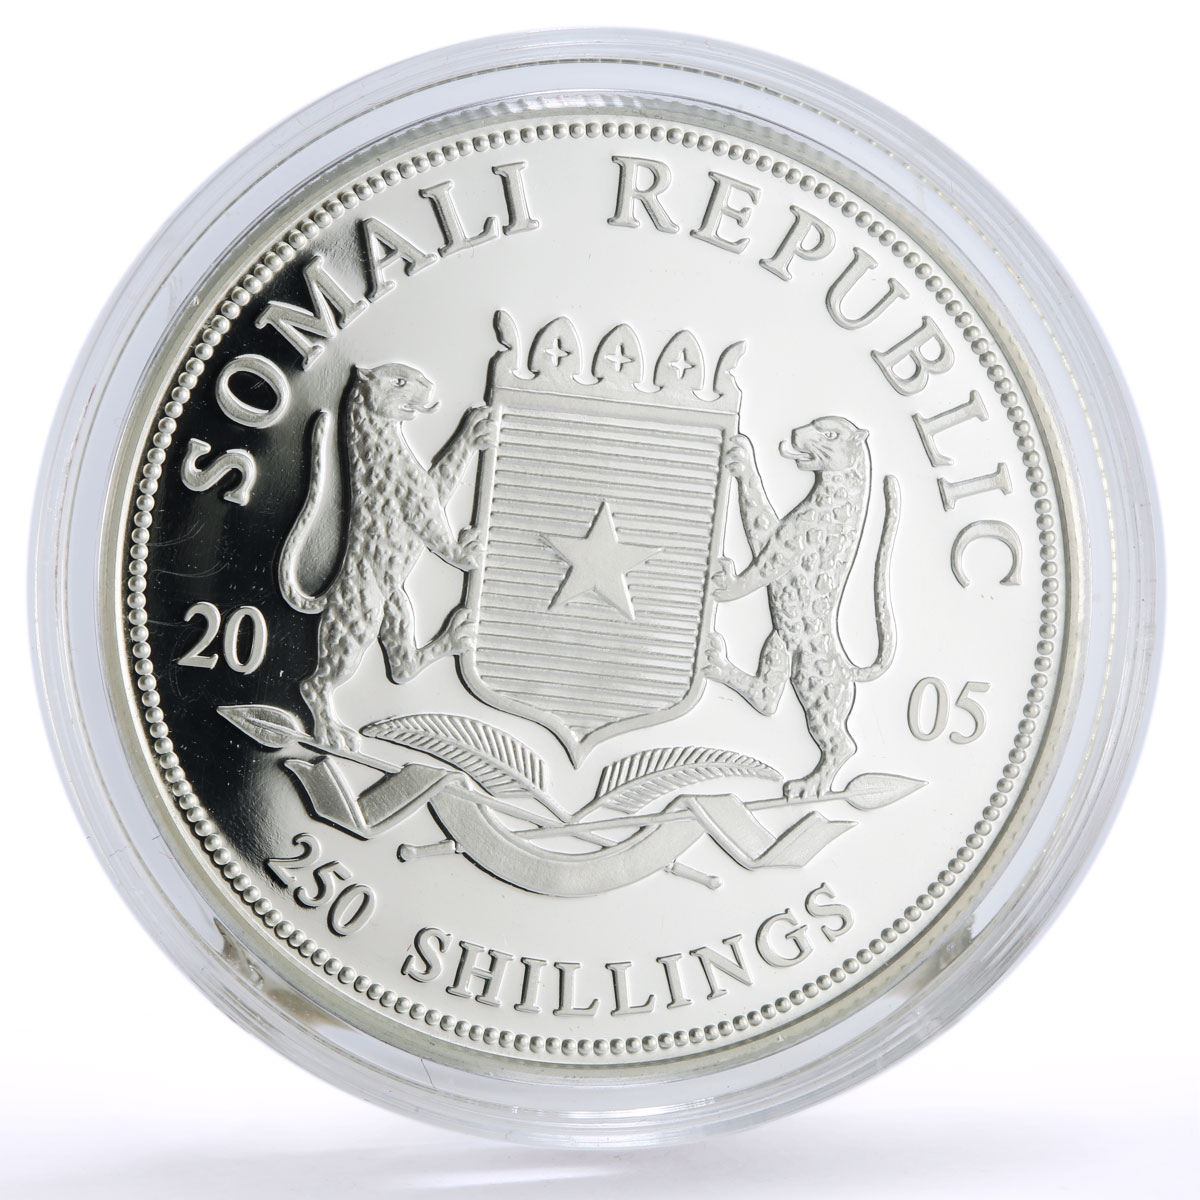 Somalia 250 shillings Conservation Wildlife Cormorant Bird Fauna Ag coin 2005